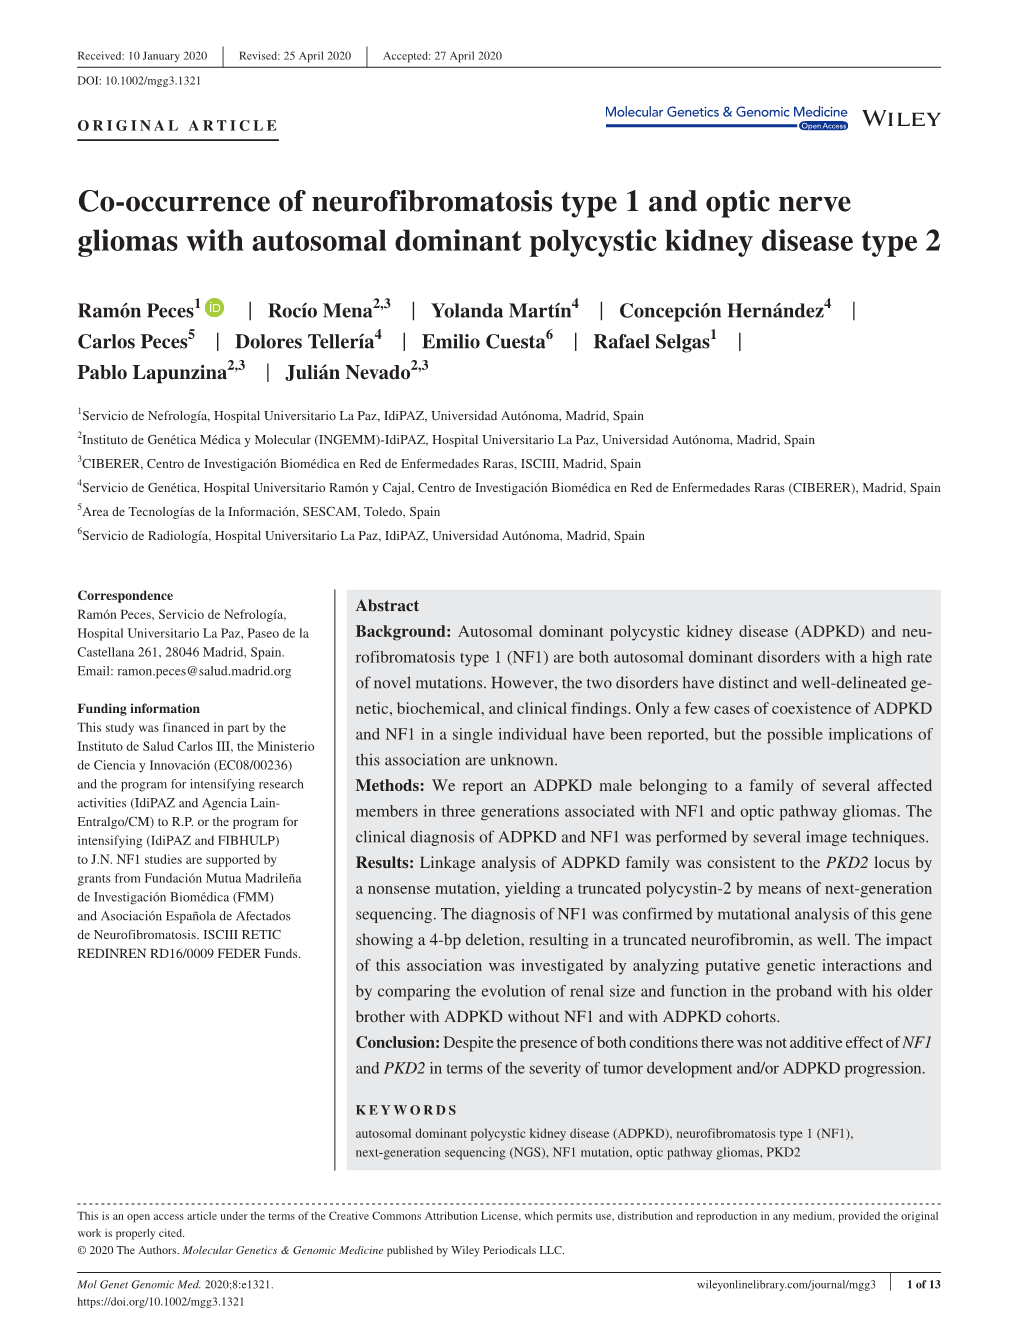 Co‐Occurrence of Neurofibromatosis Type 1 and Optic Nerve Gliomas with Autosomal Dominant Polycystic Kidney Disease Type 2